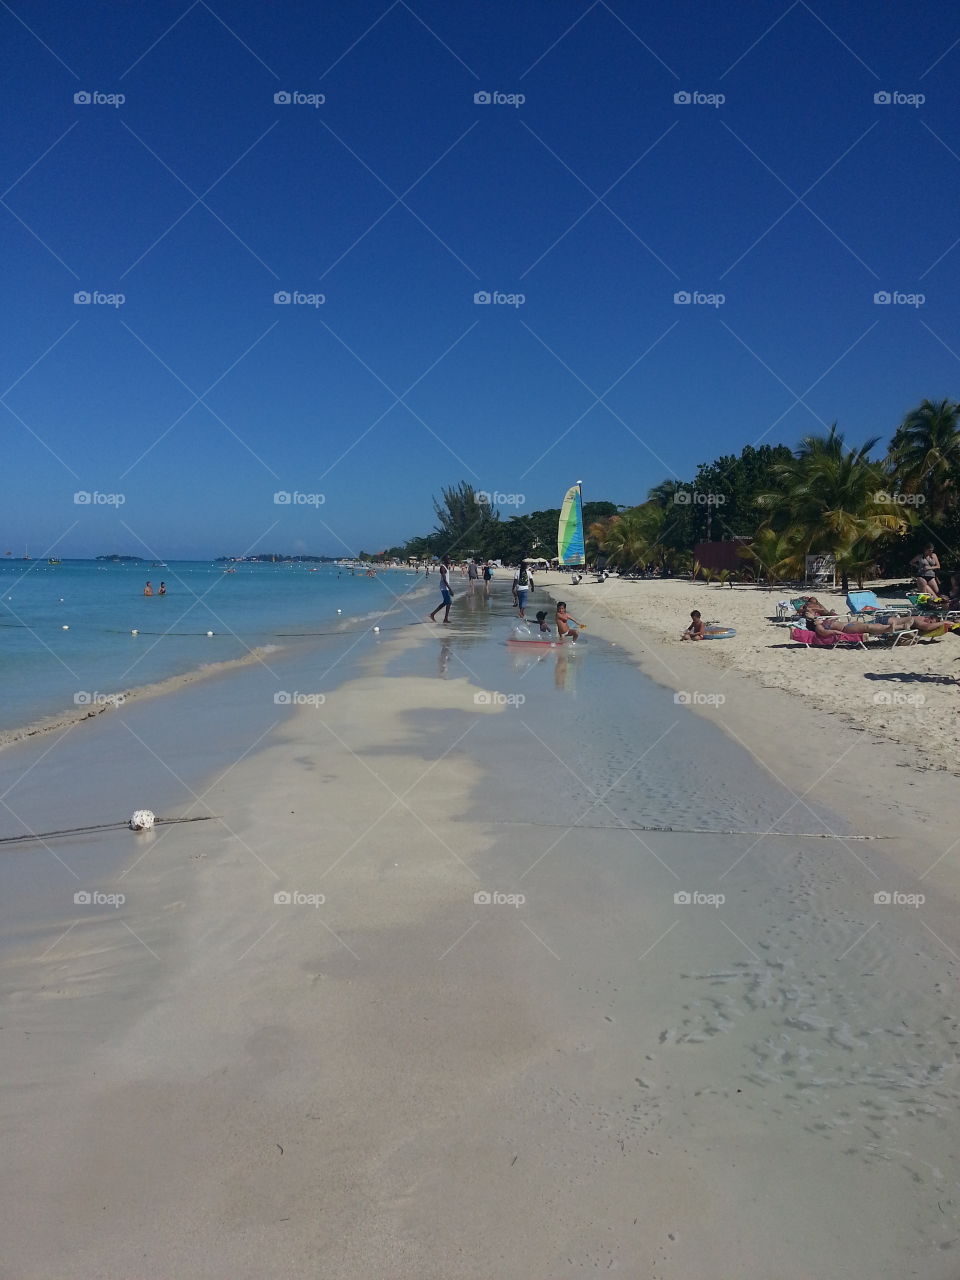 Negril Beach. Negril, Jamaica 7mile Beach